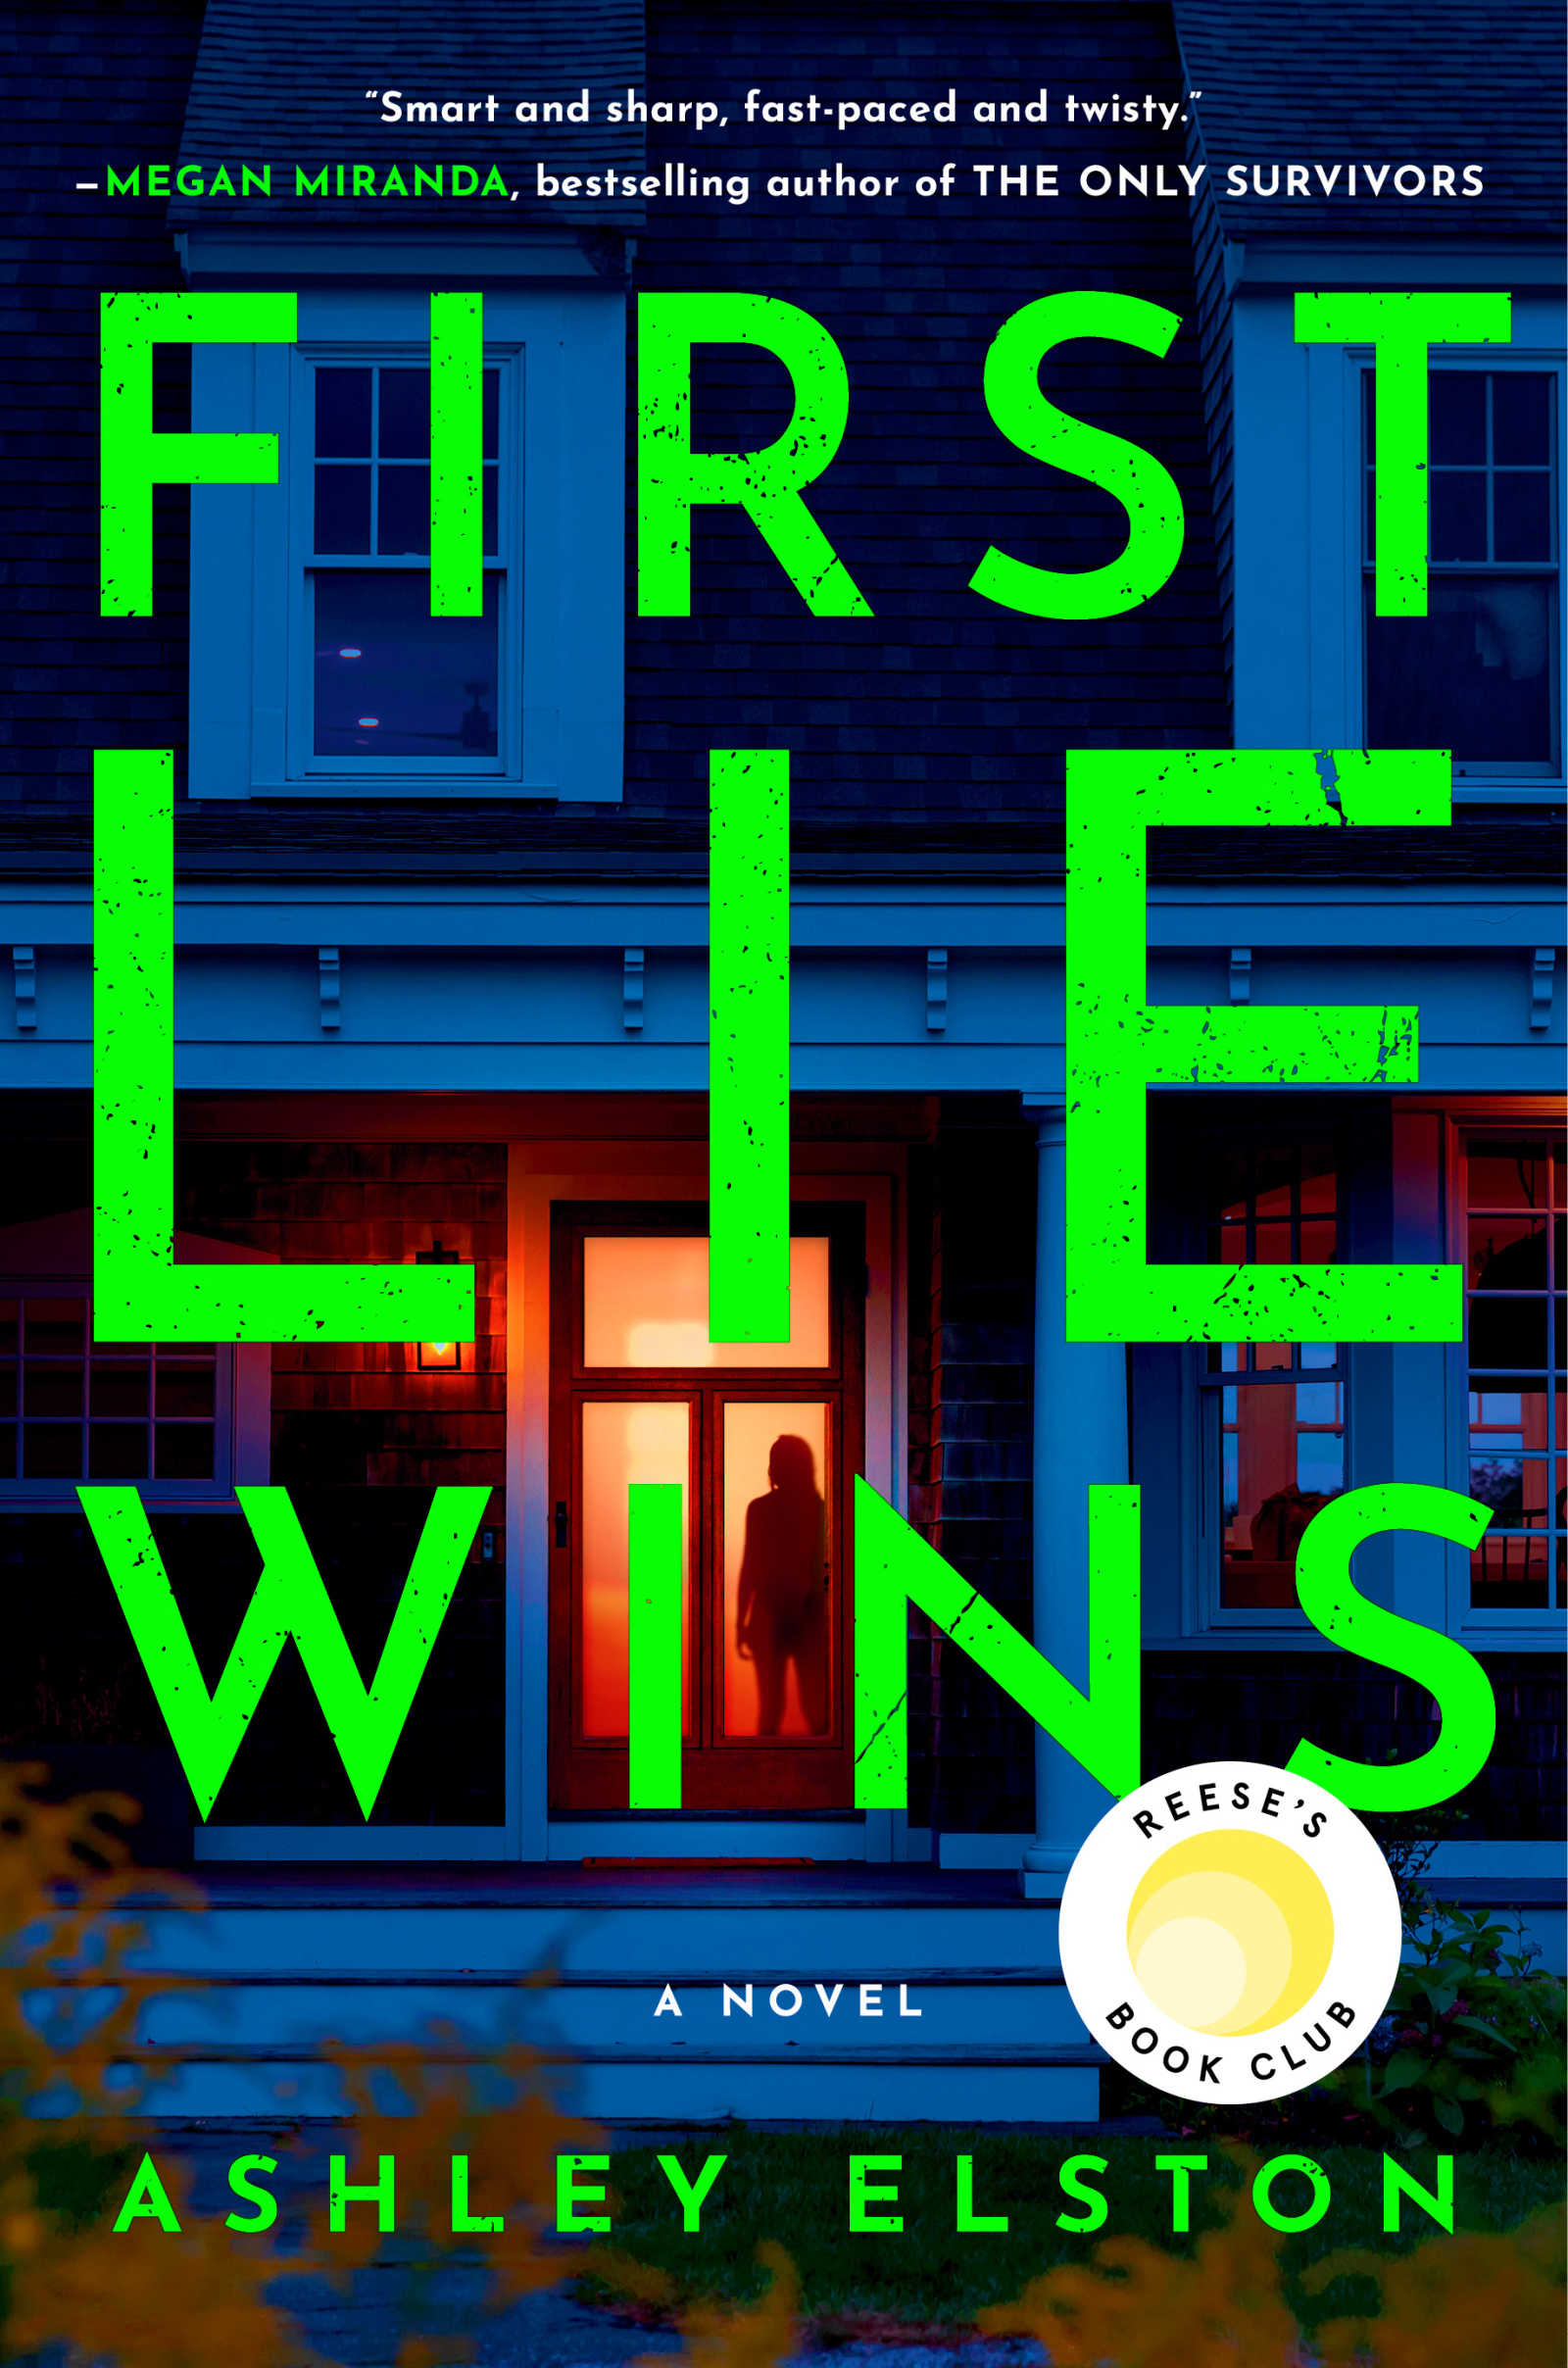 5 little lies readers tell about 'A Little Life' — Brown Paper Press